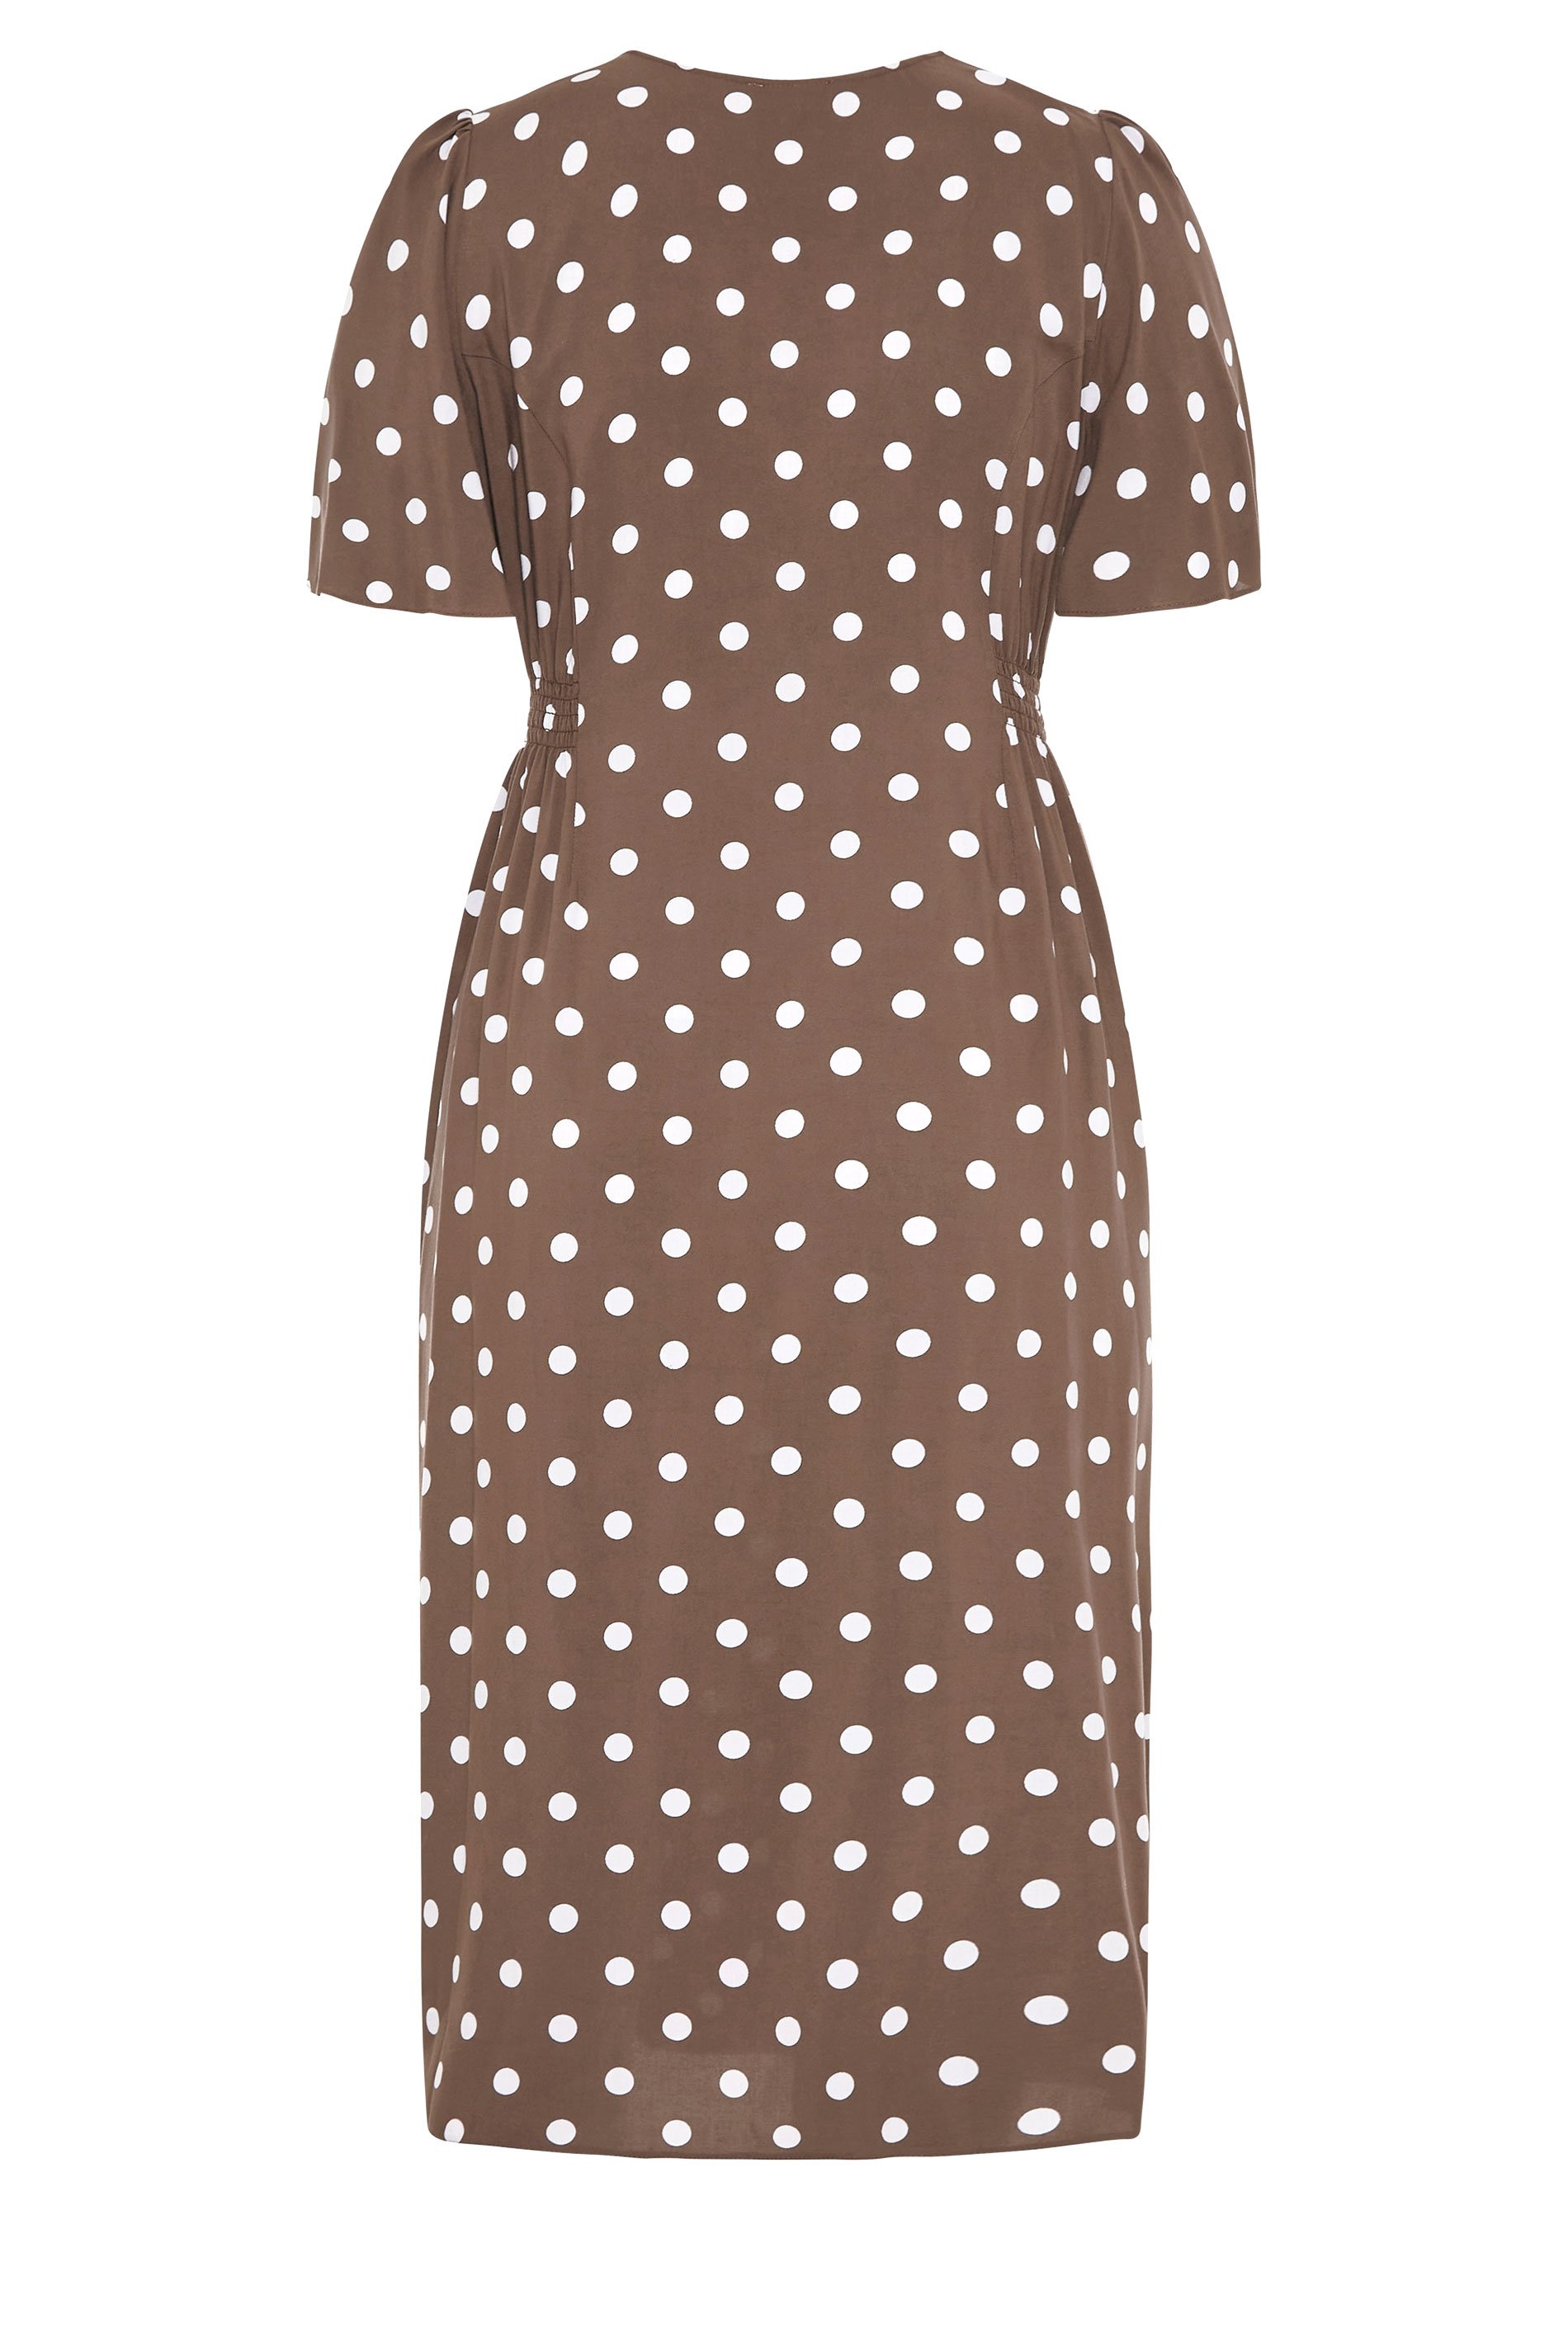 Plus Size Yours London Brown Polka Dot Button Through Midi Dress Yours Clothing 3990